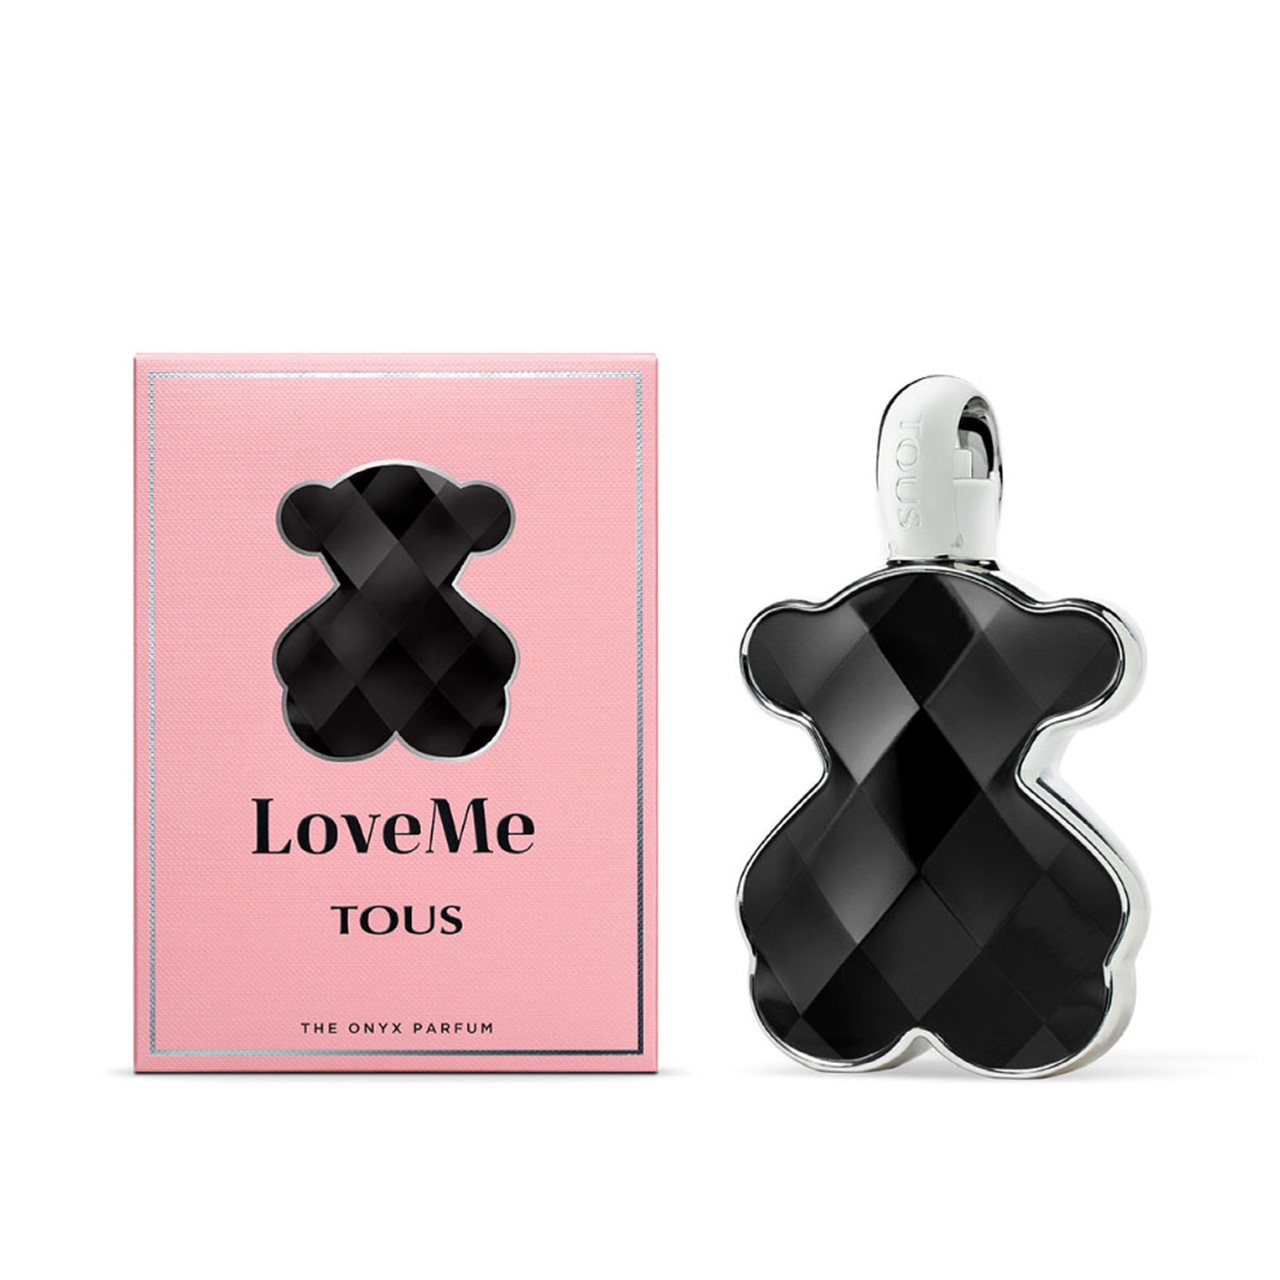 Tous LoveMe The Onyx Parfum 90ml (3.04fl oz)